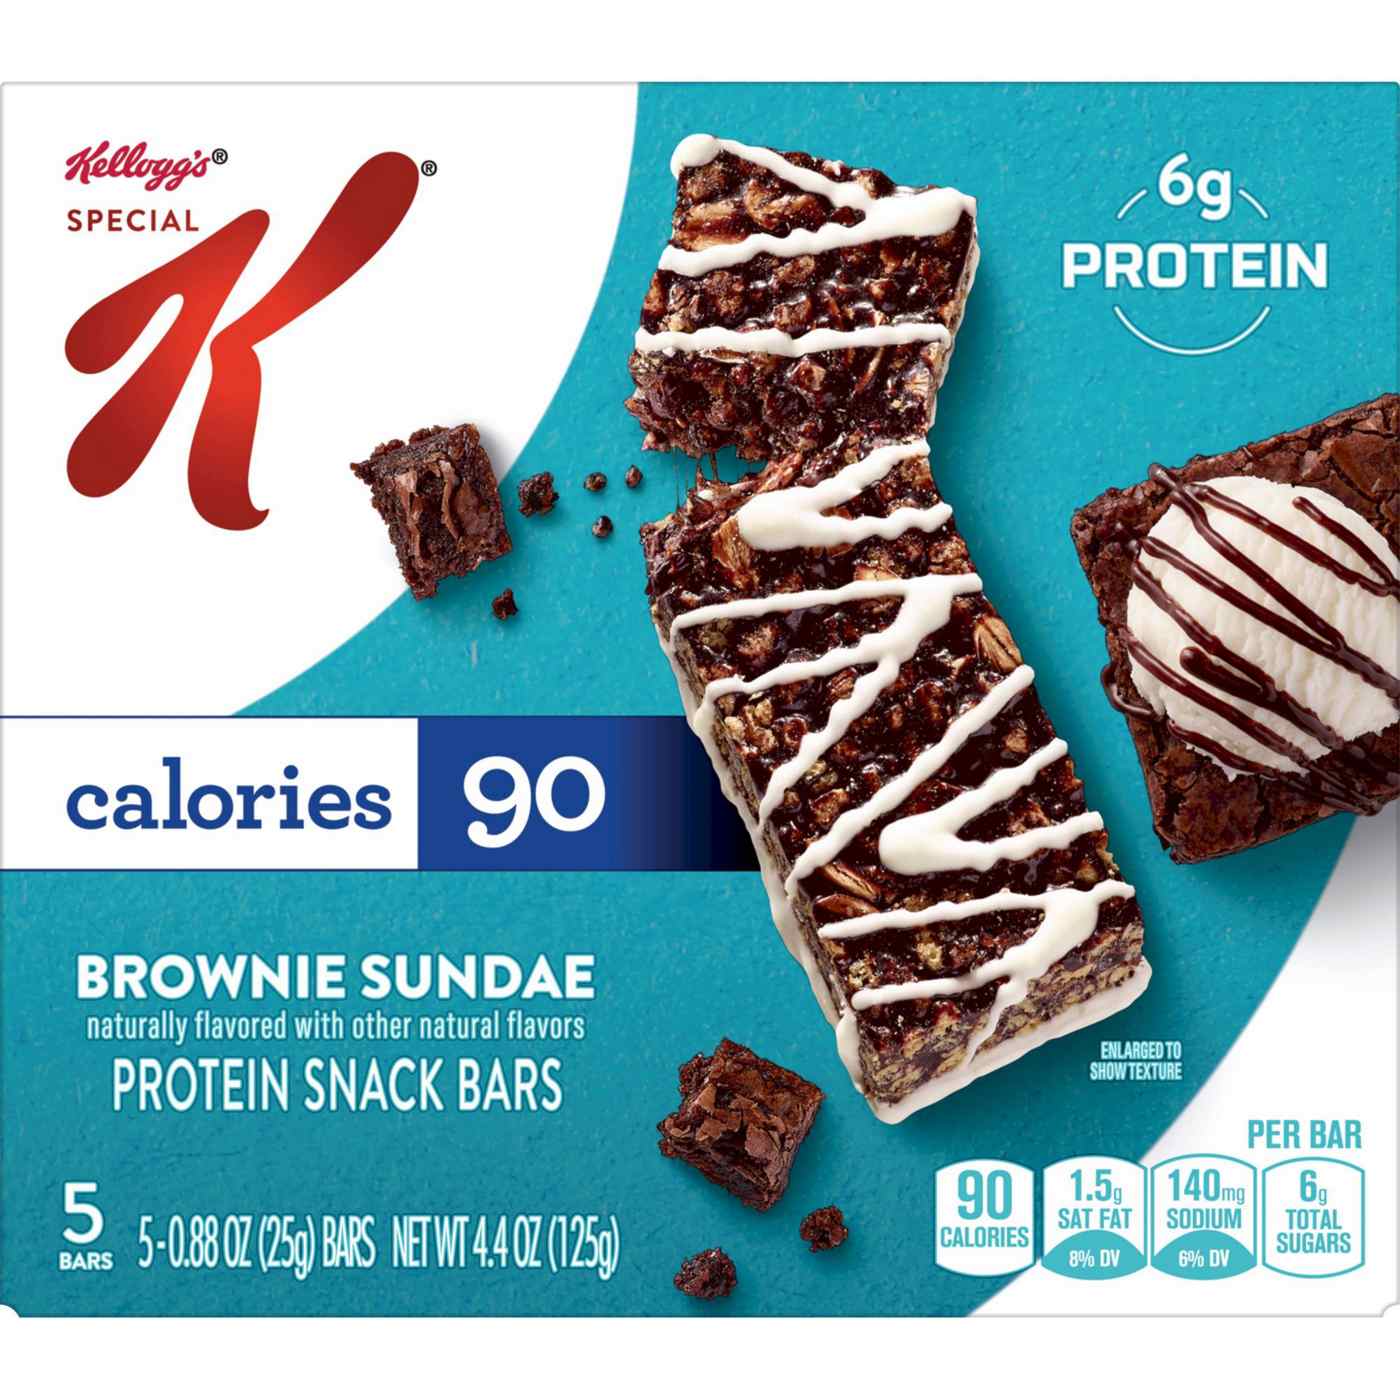 Kellogg's Special K Brownie Sundae Protein Snack Bars; image 1 of 5